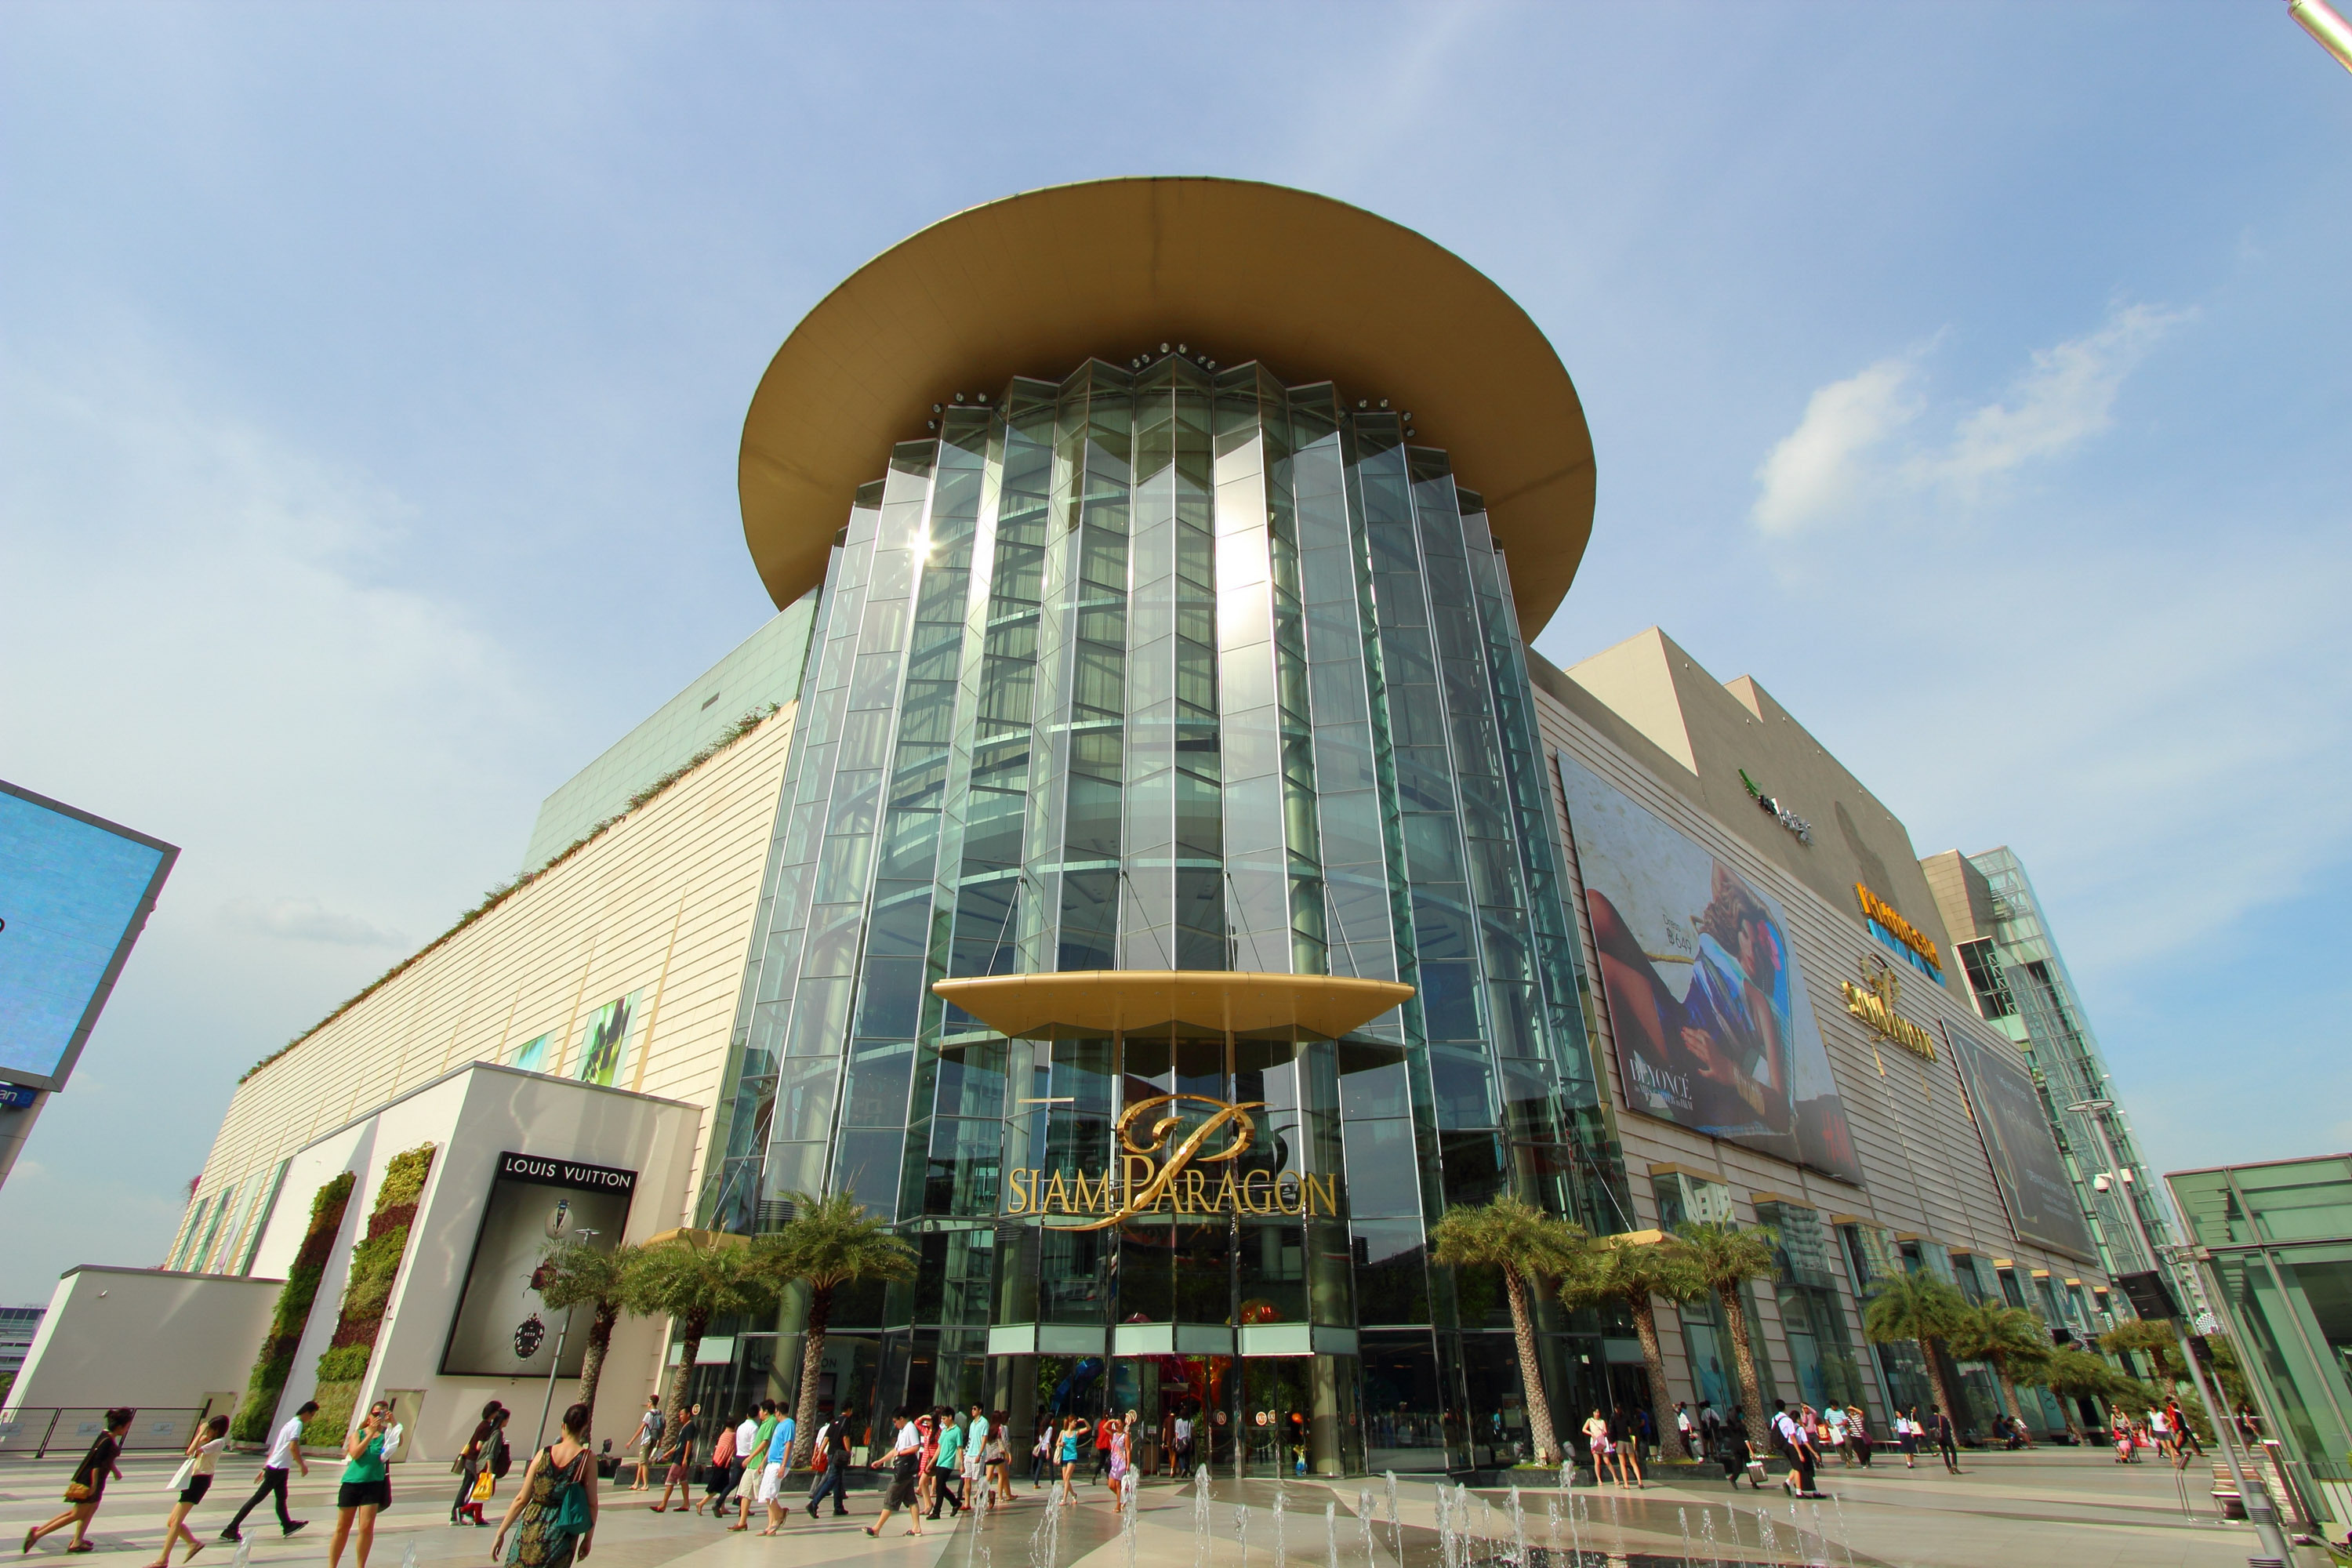 Siam Paragon shopping mall Bangkok - Upmarket shopping center